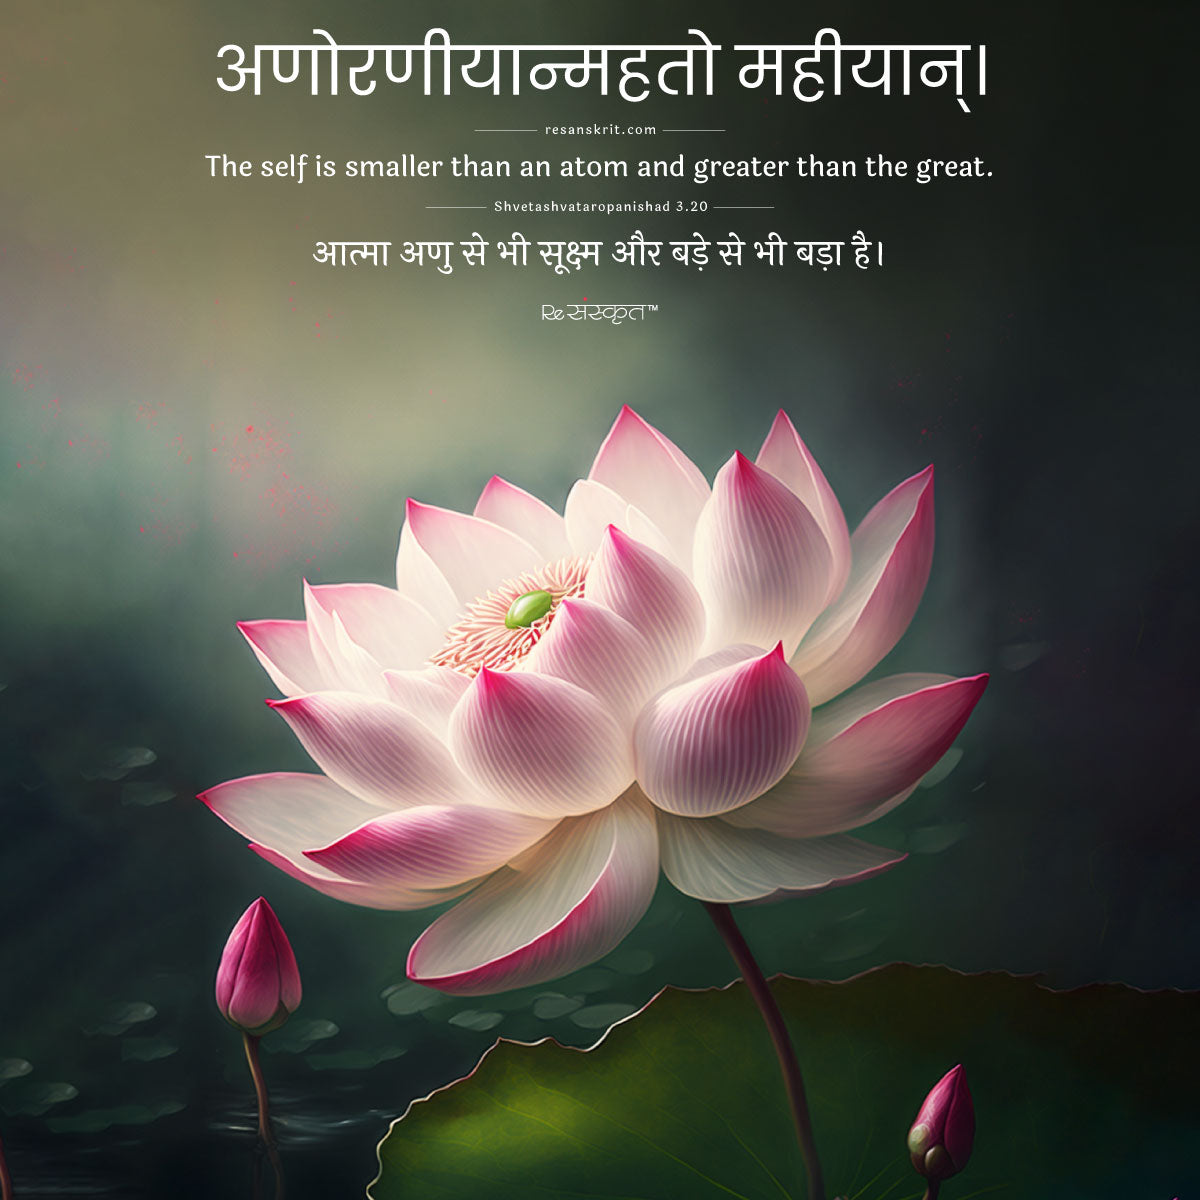 Sanskrit quote on soul